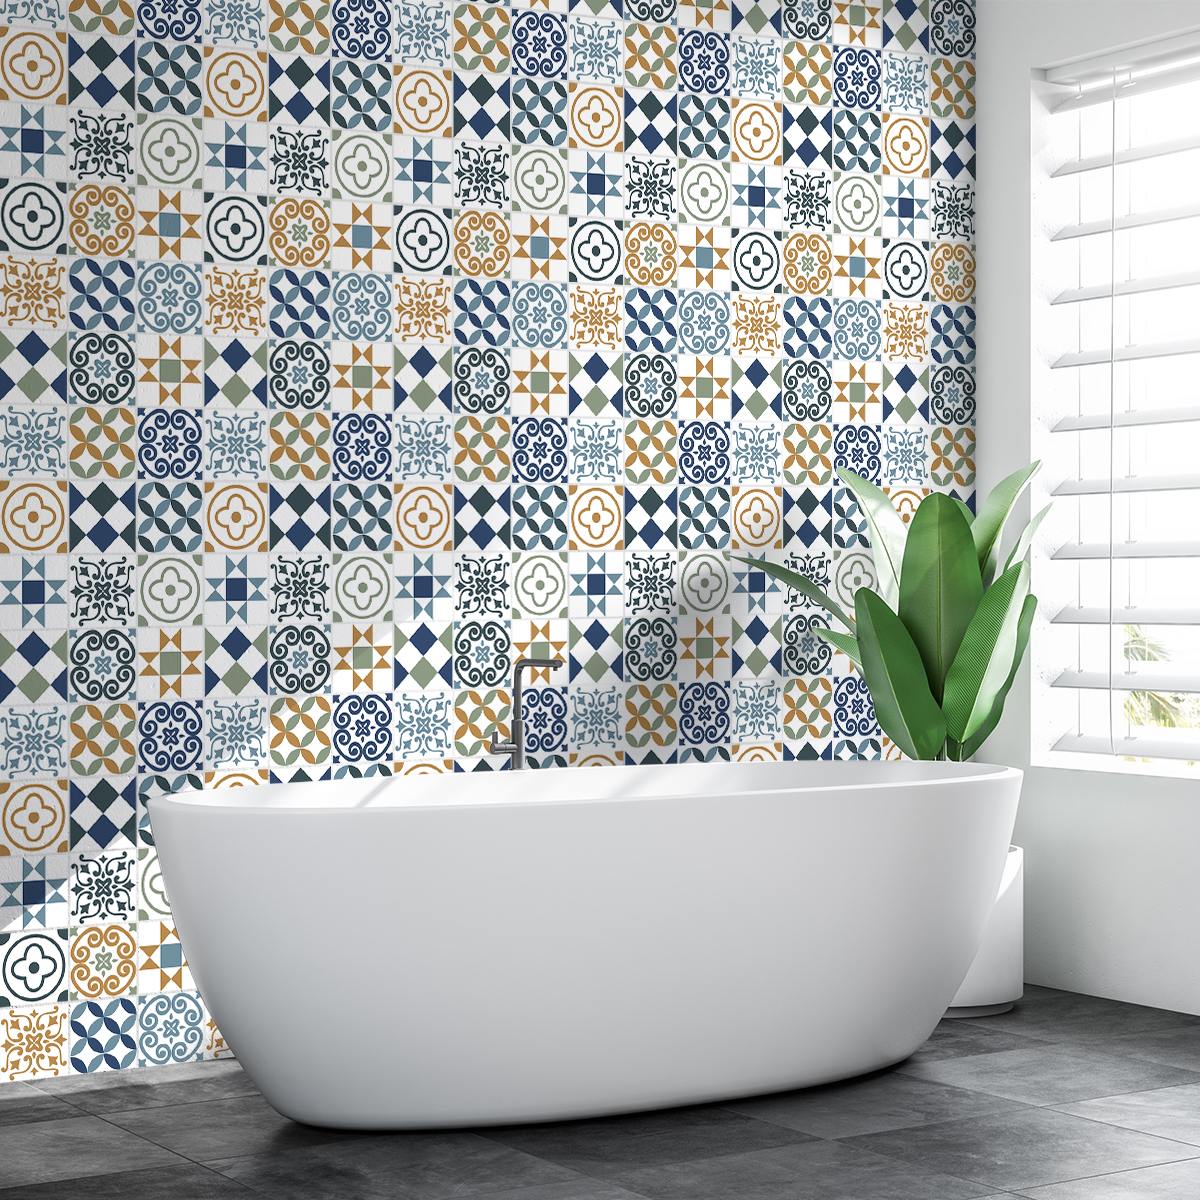 60 wall decal cement tiles azulejos hana